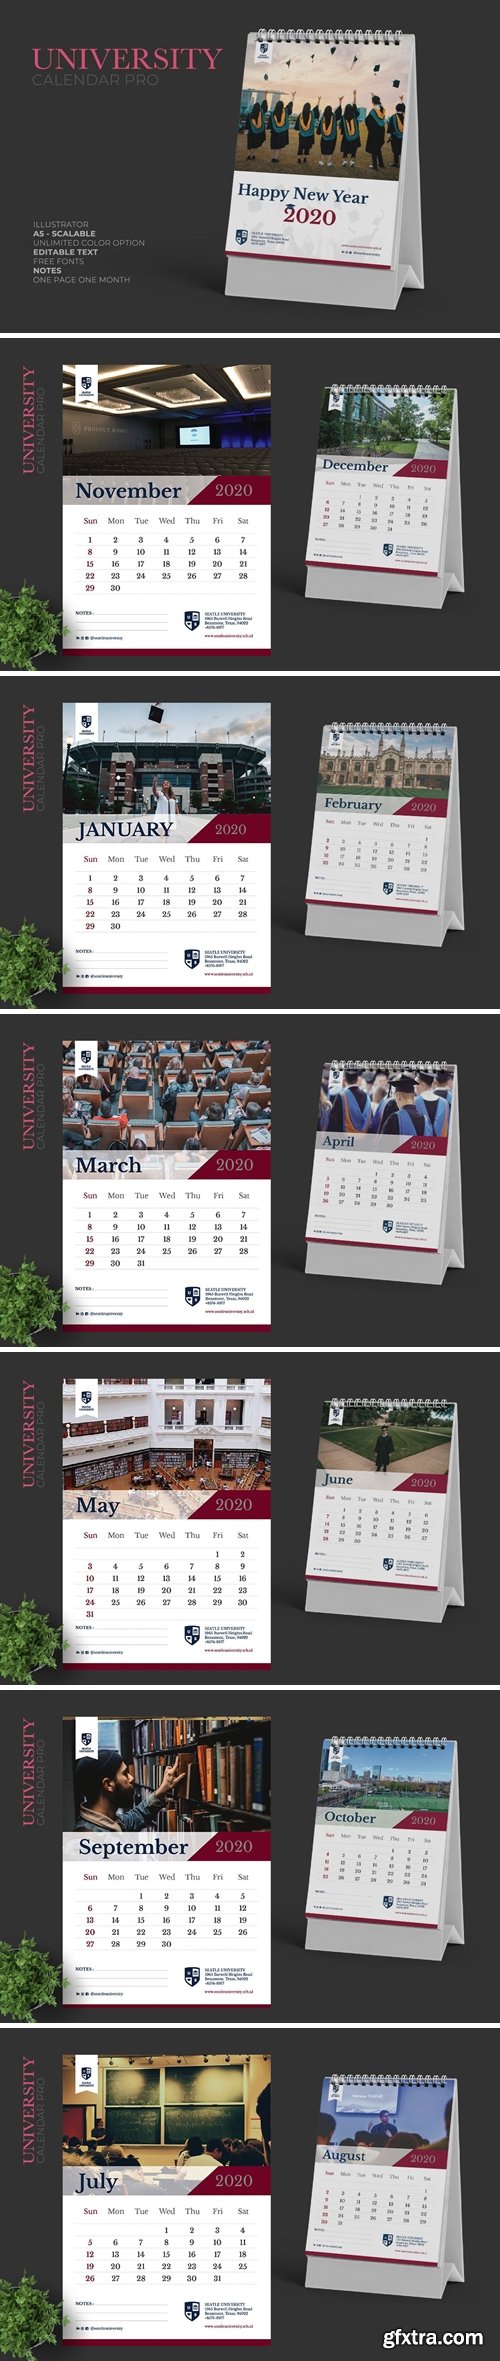 2020 University Calendar Pro